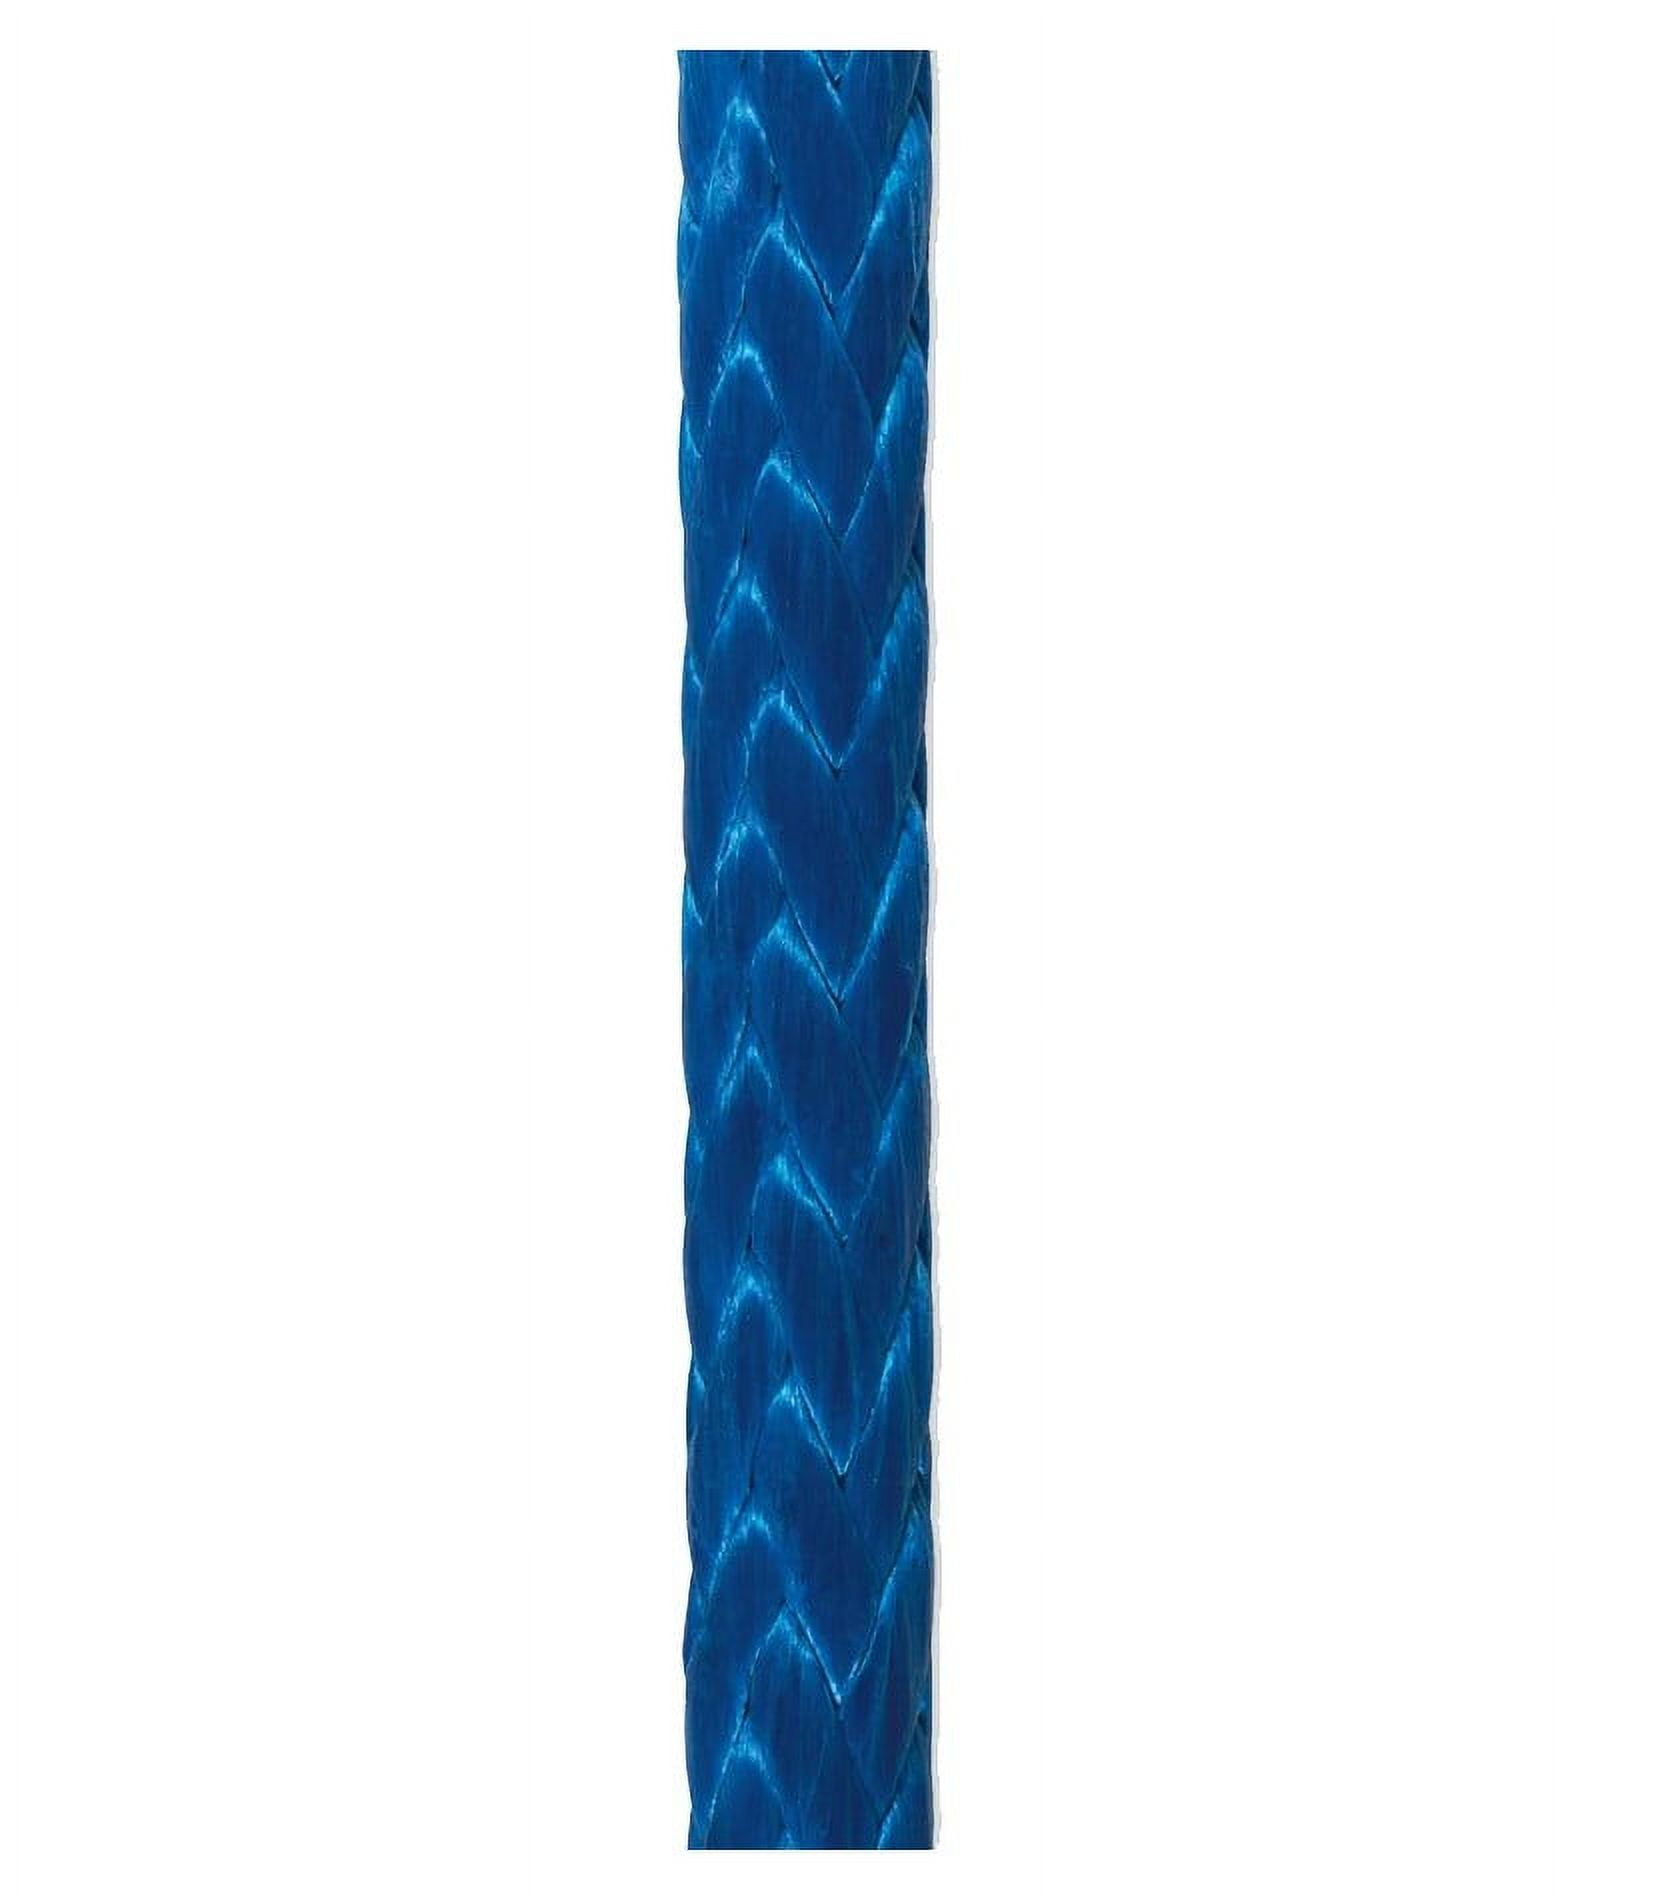 Samson AmSteel-Blue Rope, Blue 3/8 inch x 600' Spool